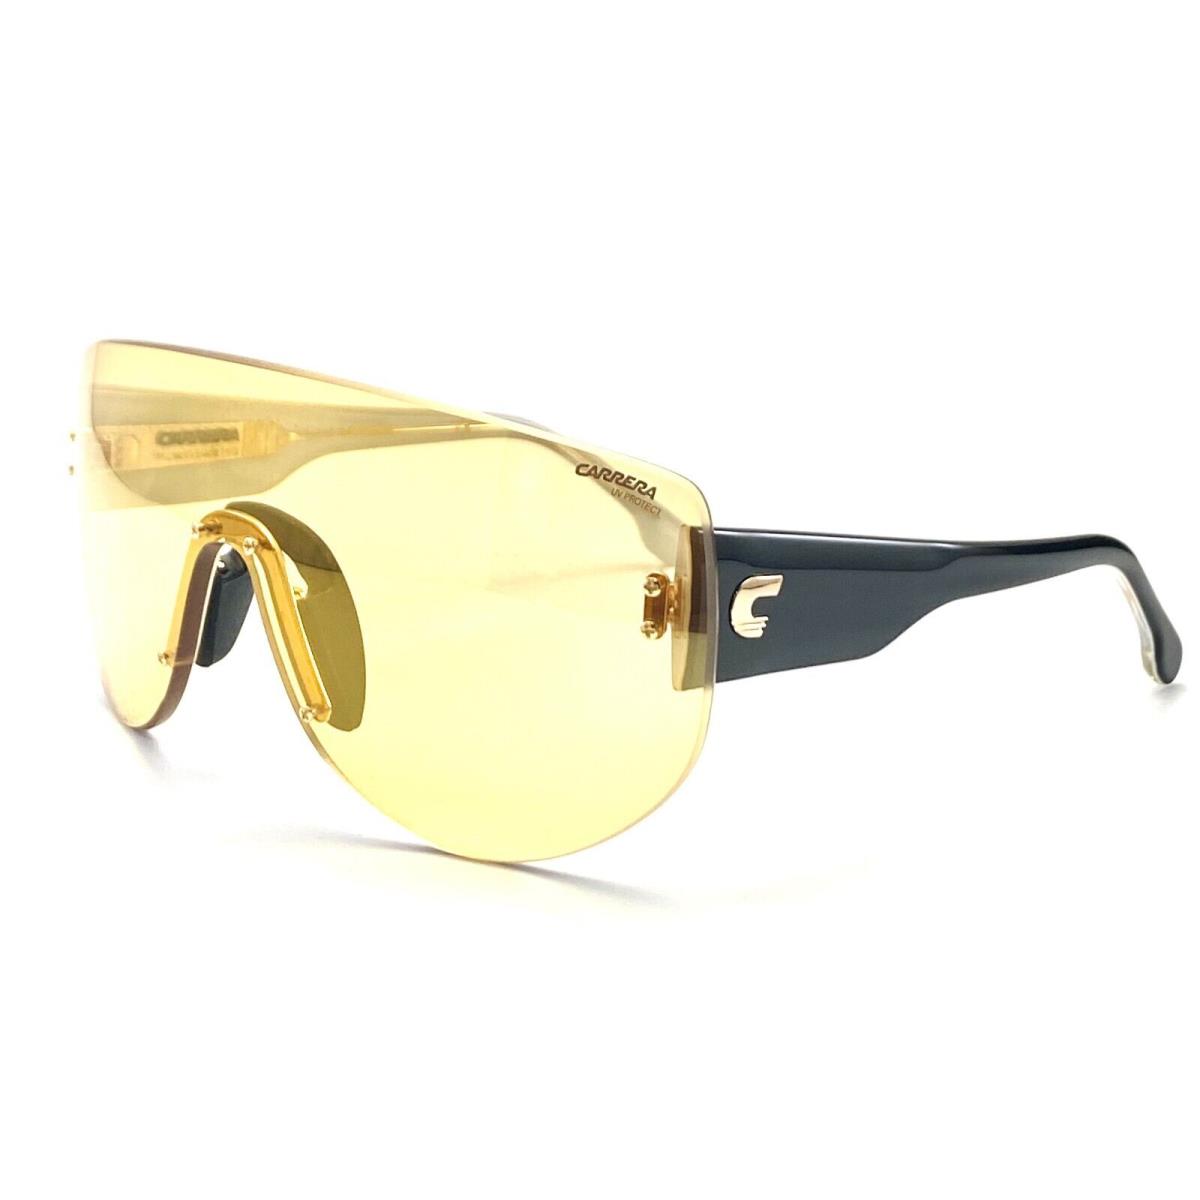 Carrera Flagbag 12 4CWET Black Sunglasses 99-01 140 V - Frame: Black, Lens: Yellow